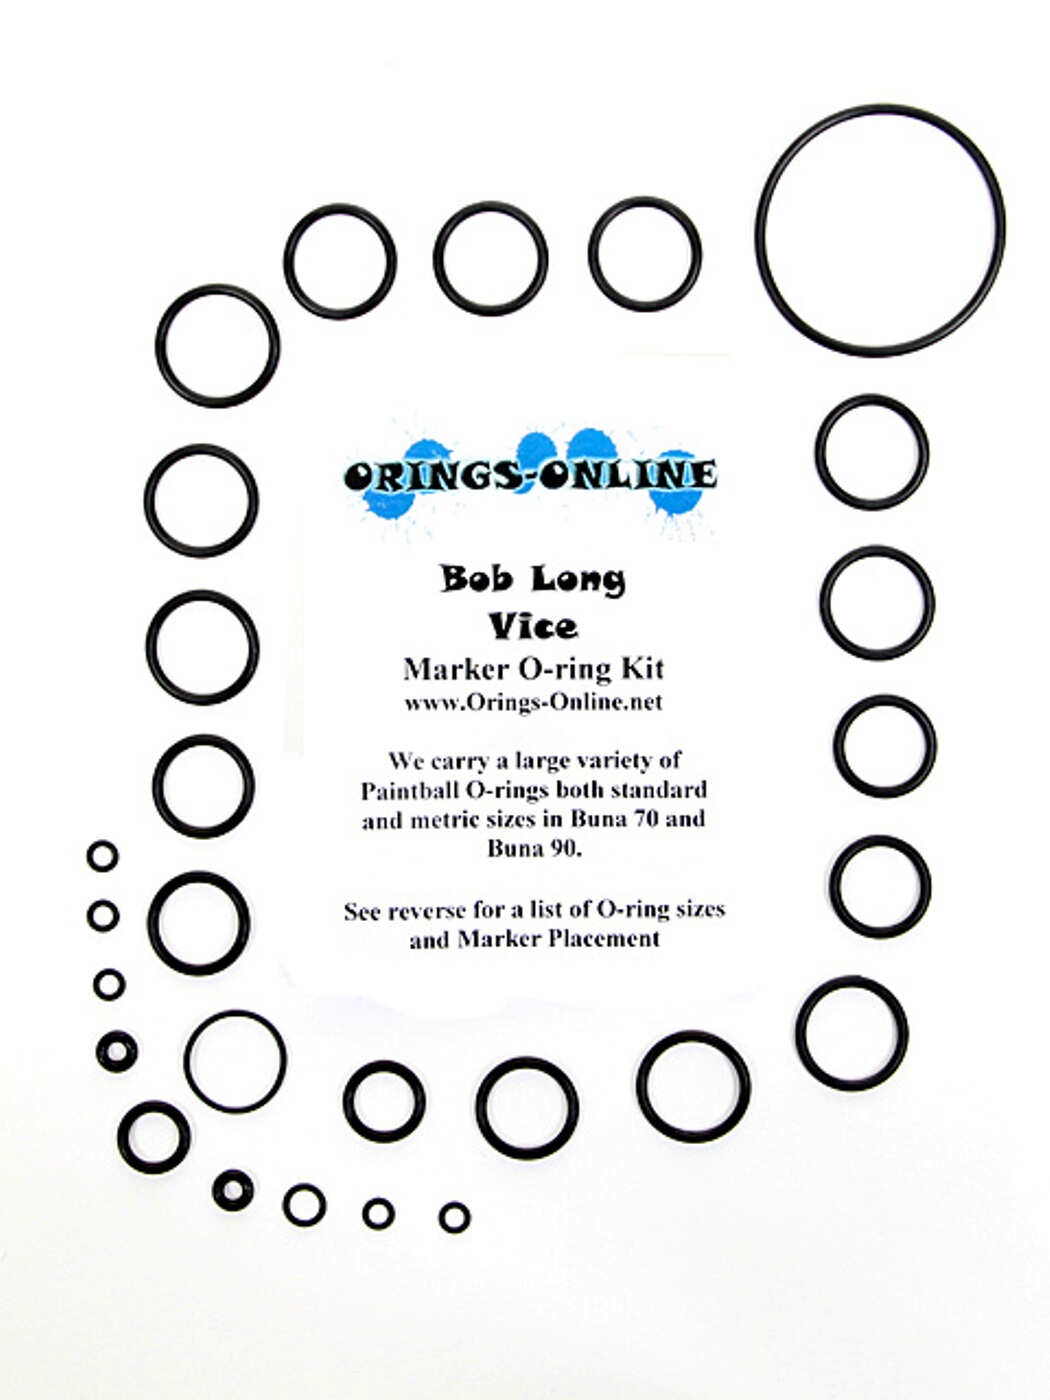 Bob Long Vice Marker O-ring Kit